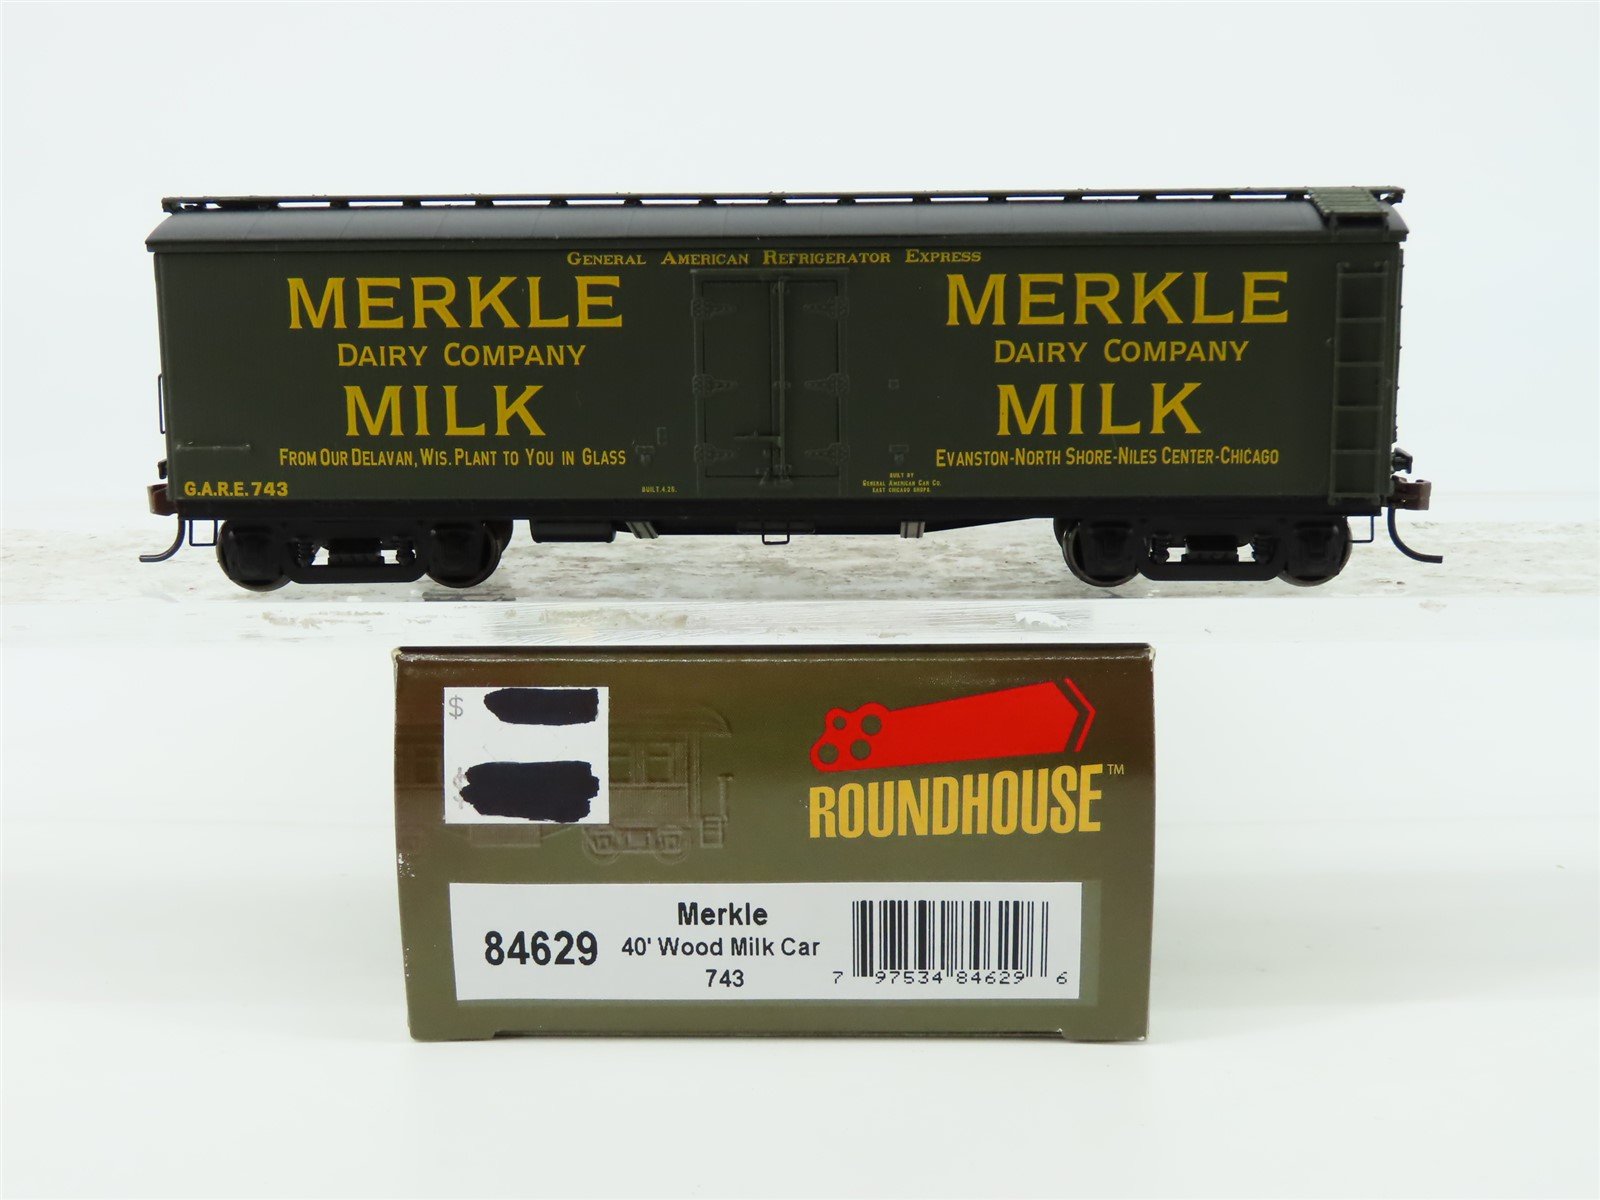 HO Scale Roundhouse 84629 Merkle Dairy Company 40' Wood Milk Car #743